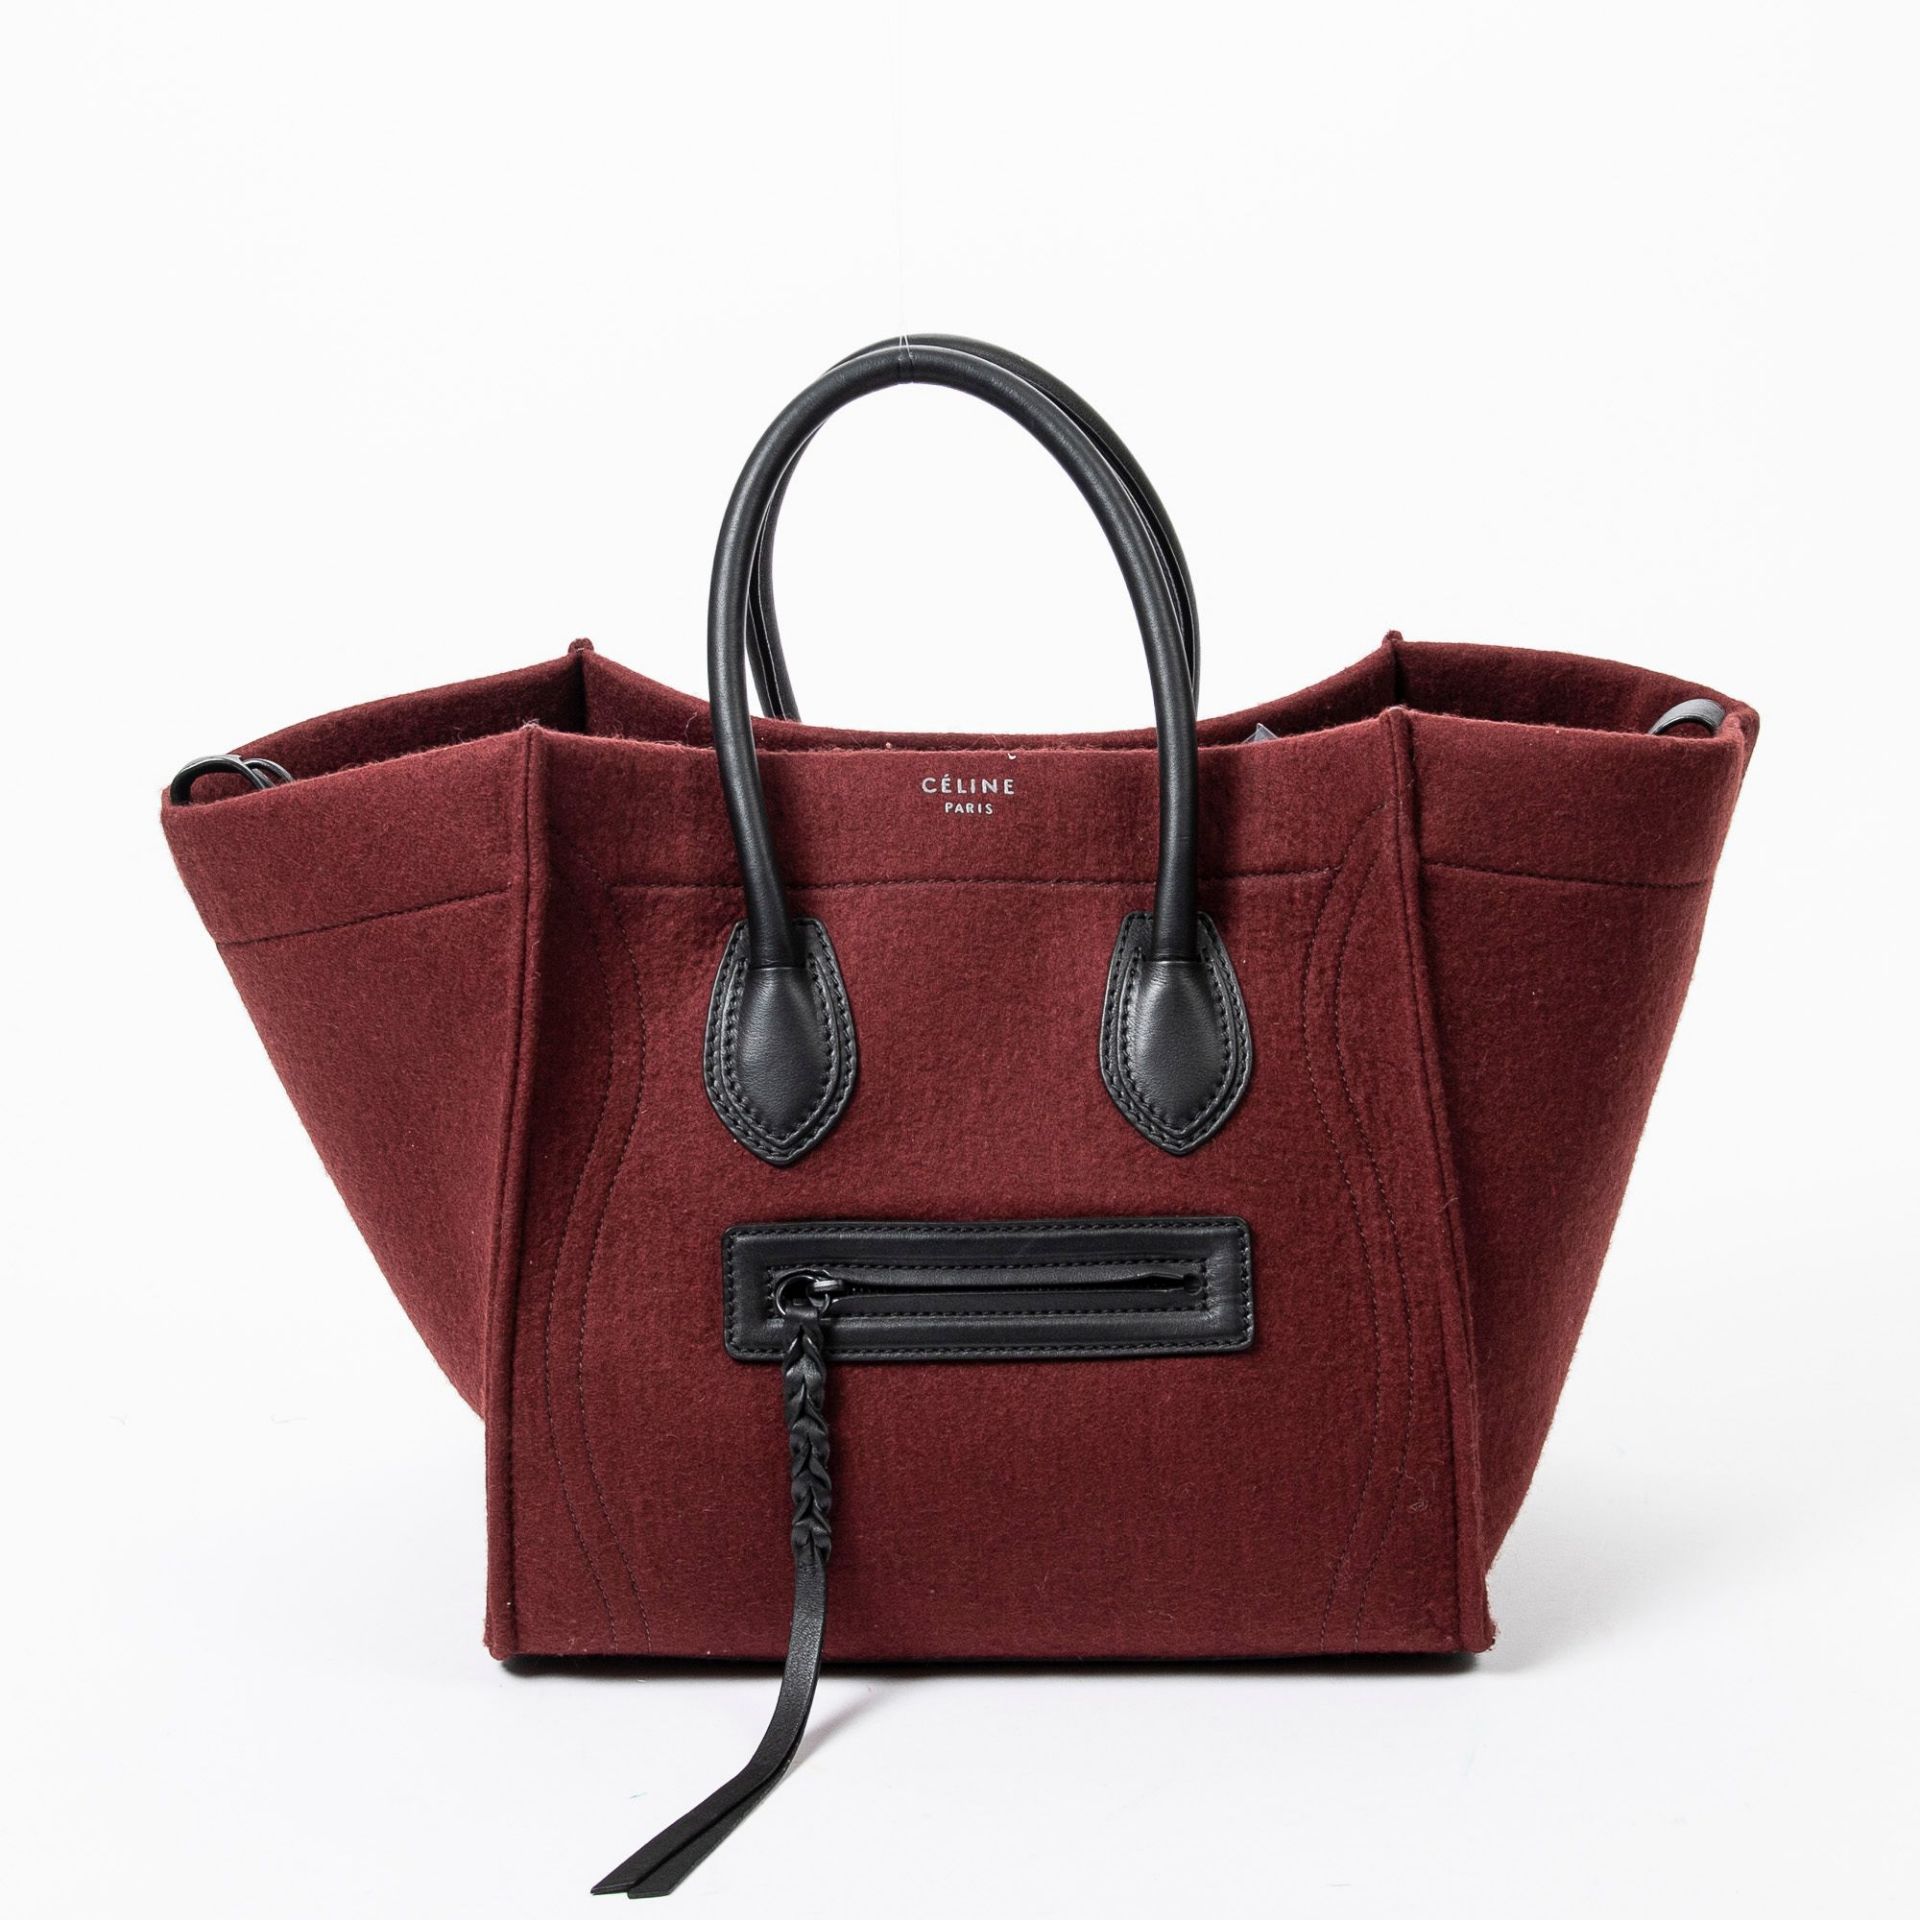 RRP £2500 Celine Phantom Luggage Handbag in Red and Black - AAN4455 - Grade A Please Contact Us